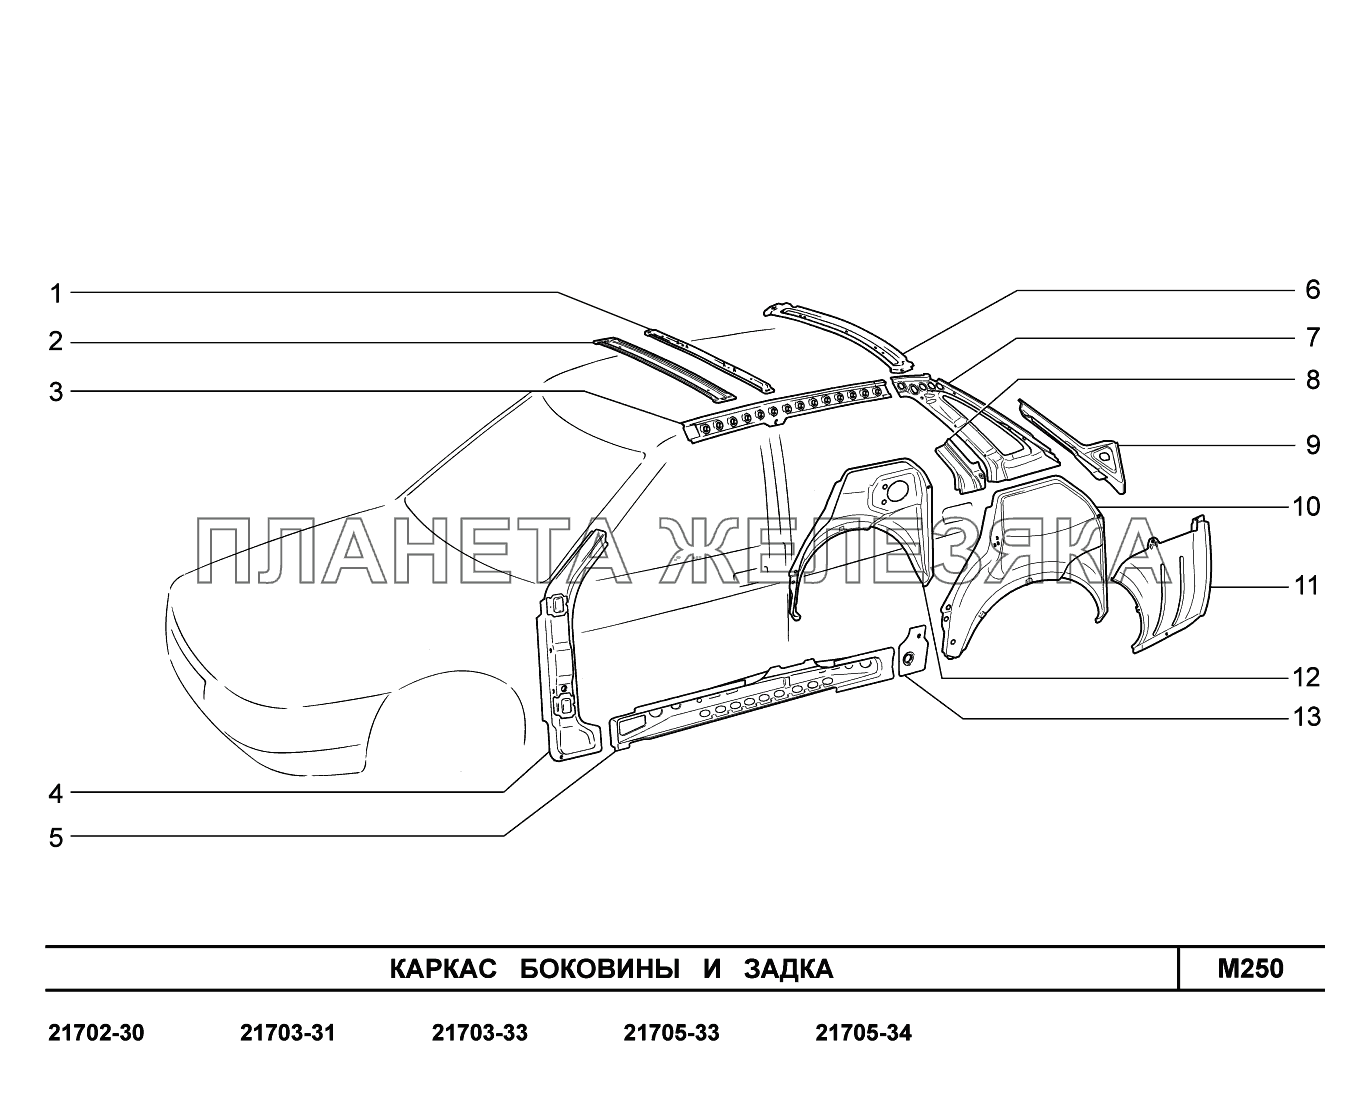 M250. Каркас боковины и задка ВАЗ-2170 